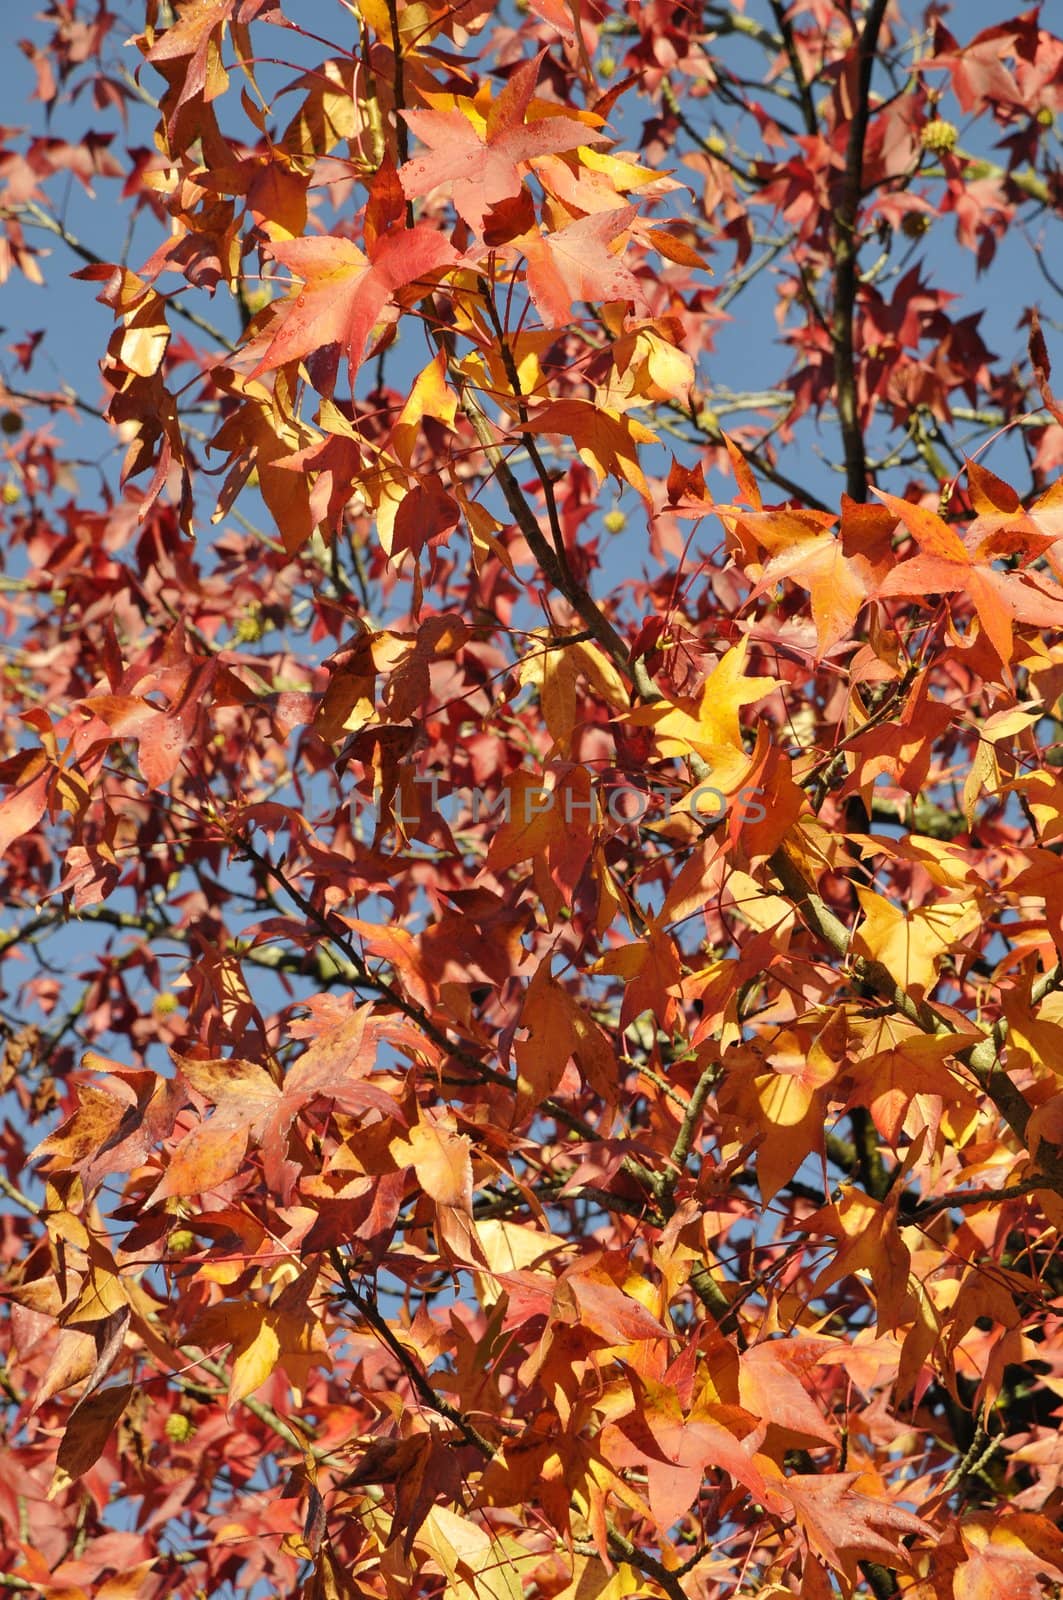 Many autumn leafs with a blue sky